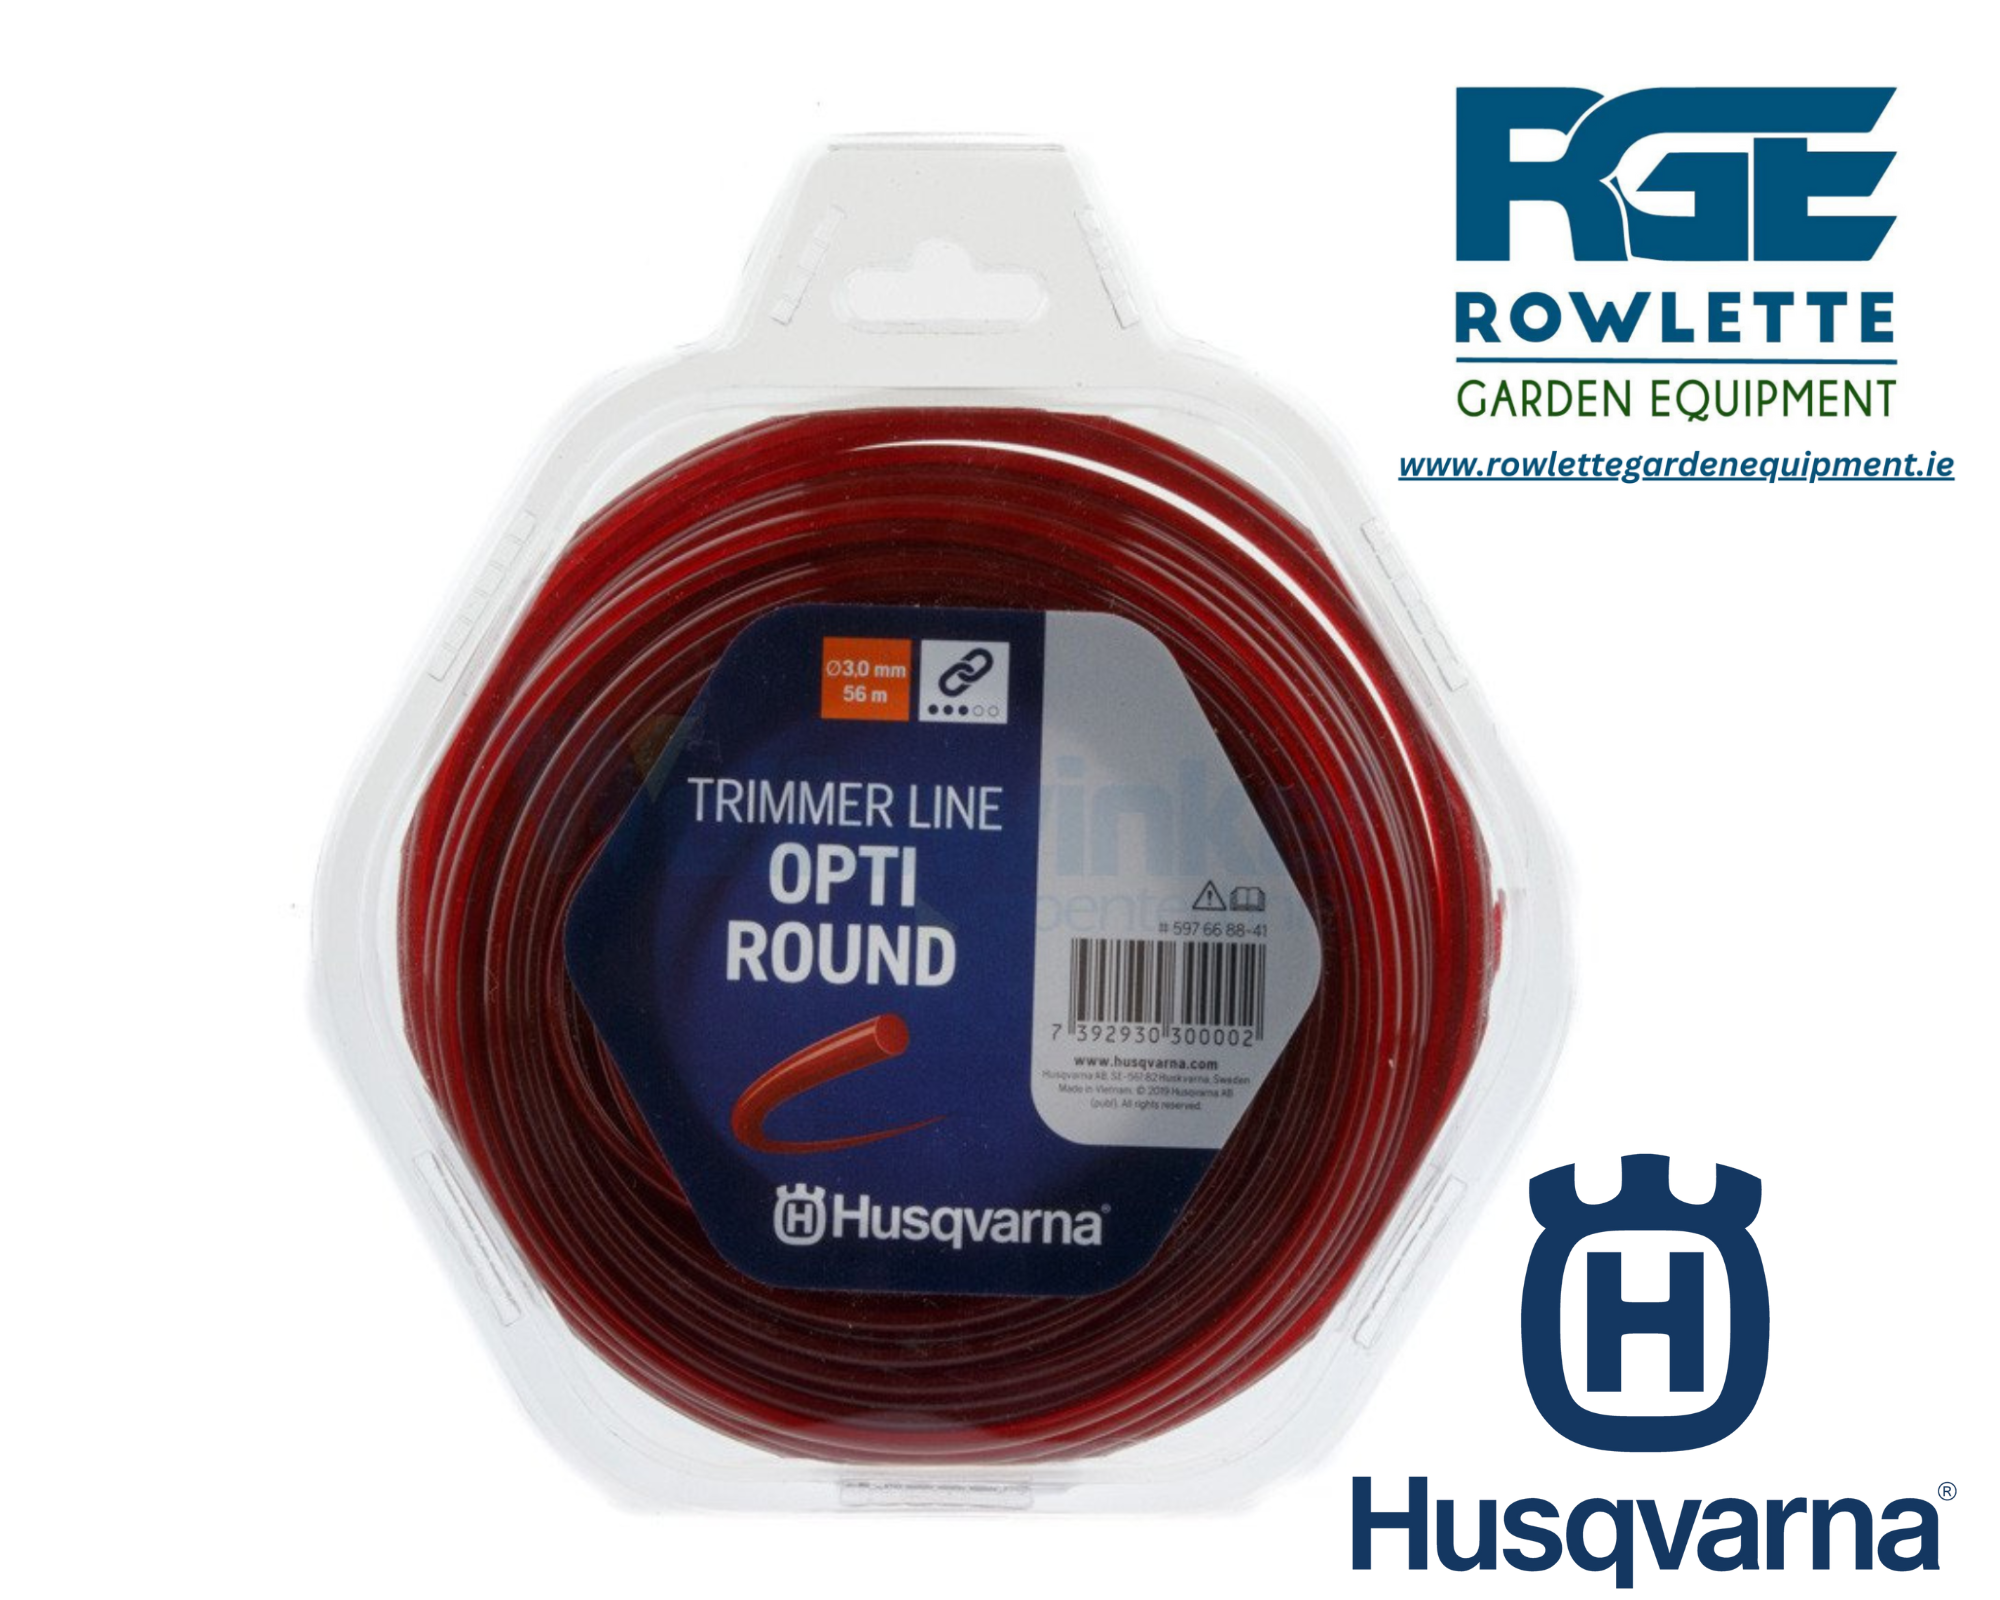 Husqvarna Brushcutter Opti Round 3.0 mm 56 m Red Line Trimmer